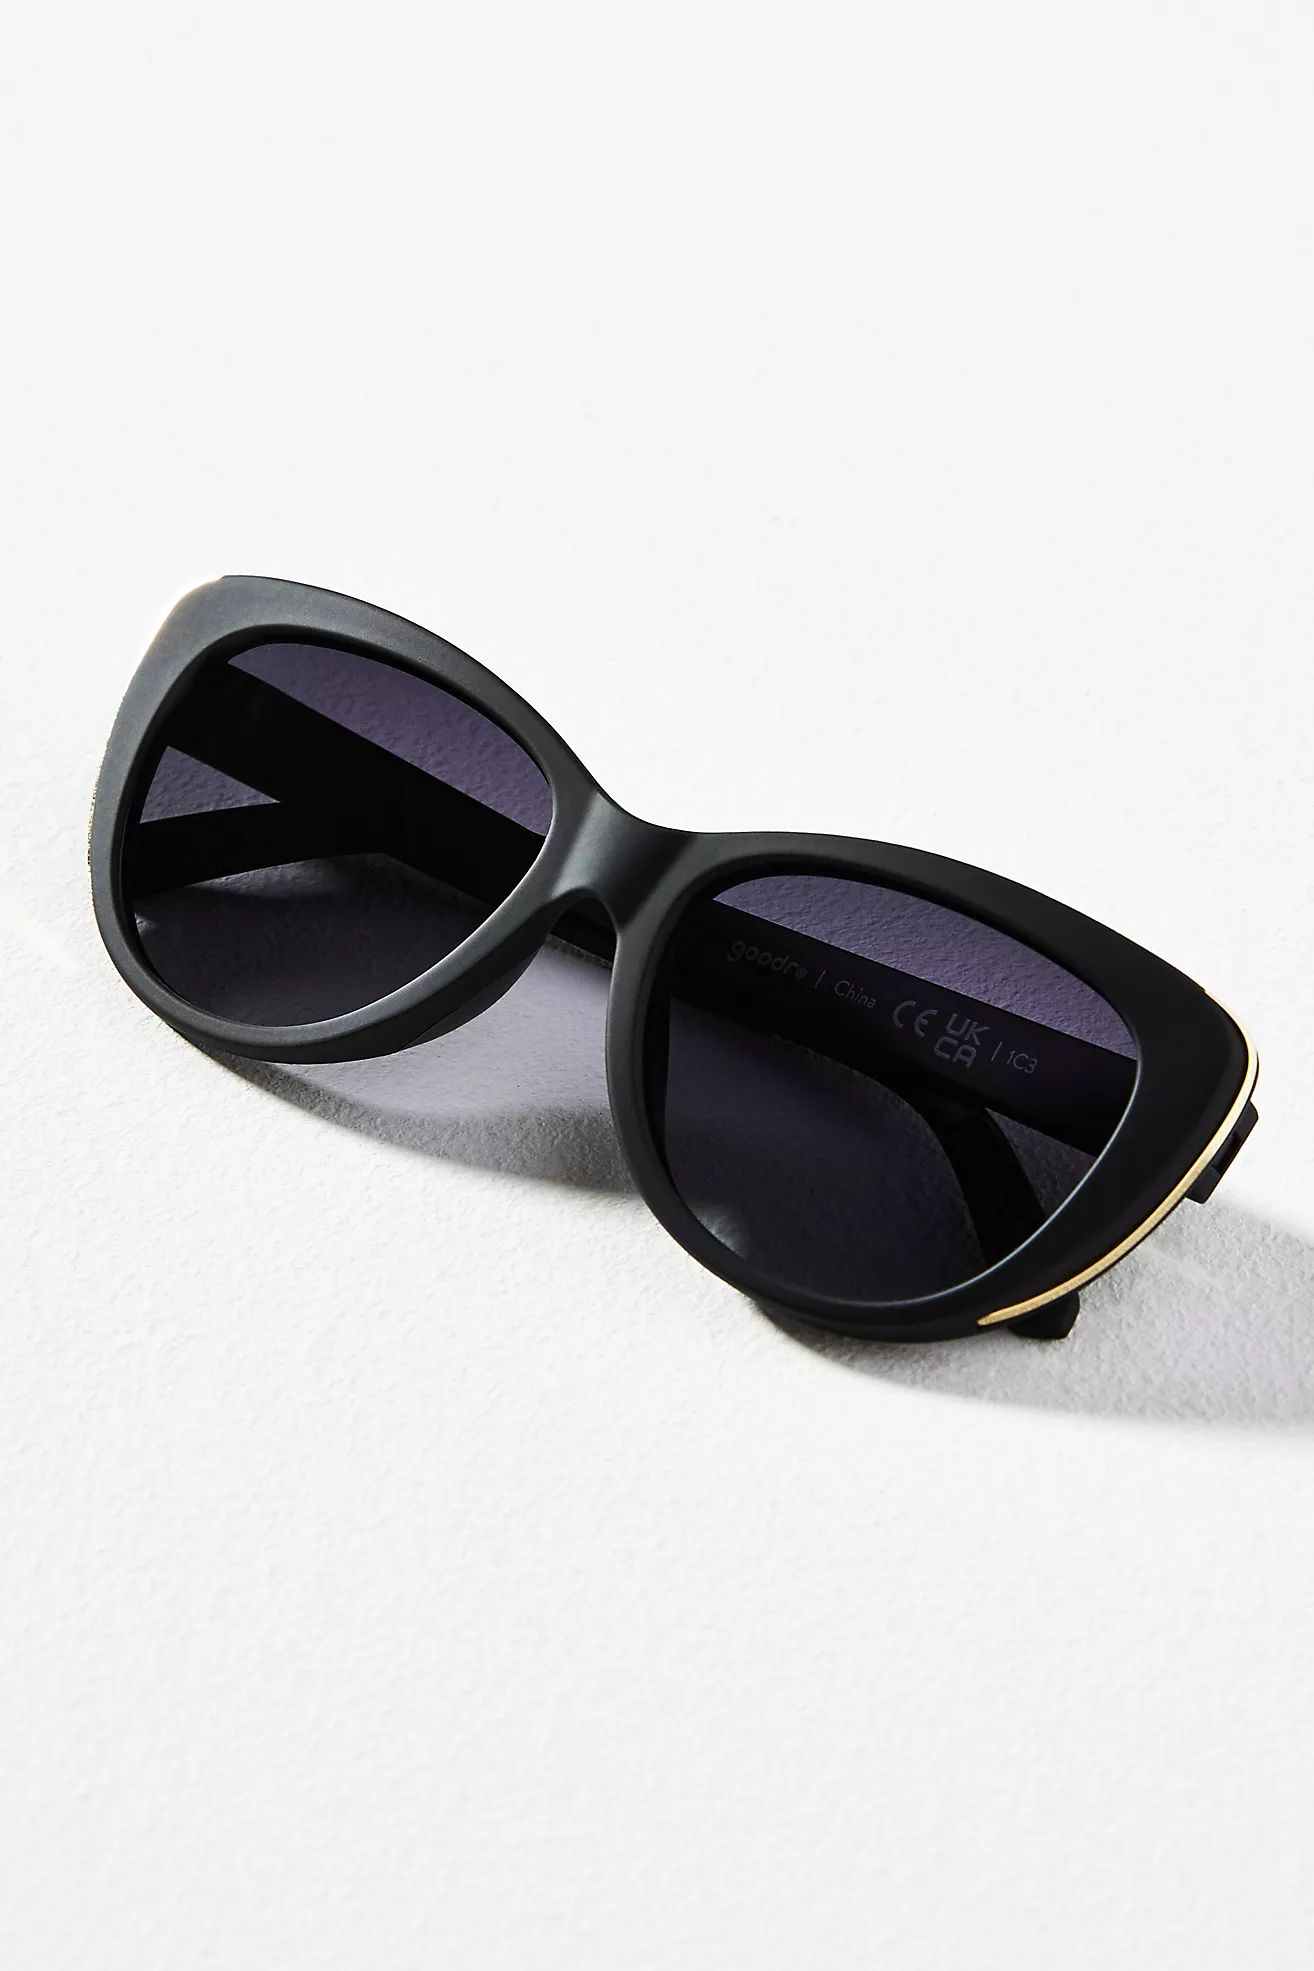 Goodr Breakfast Run To Tiffany's Polarized Sunglasses | Anthropologie (US)